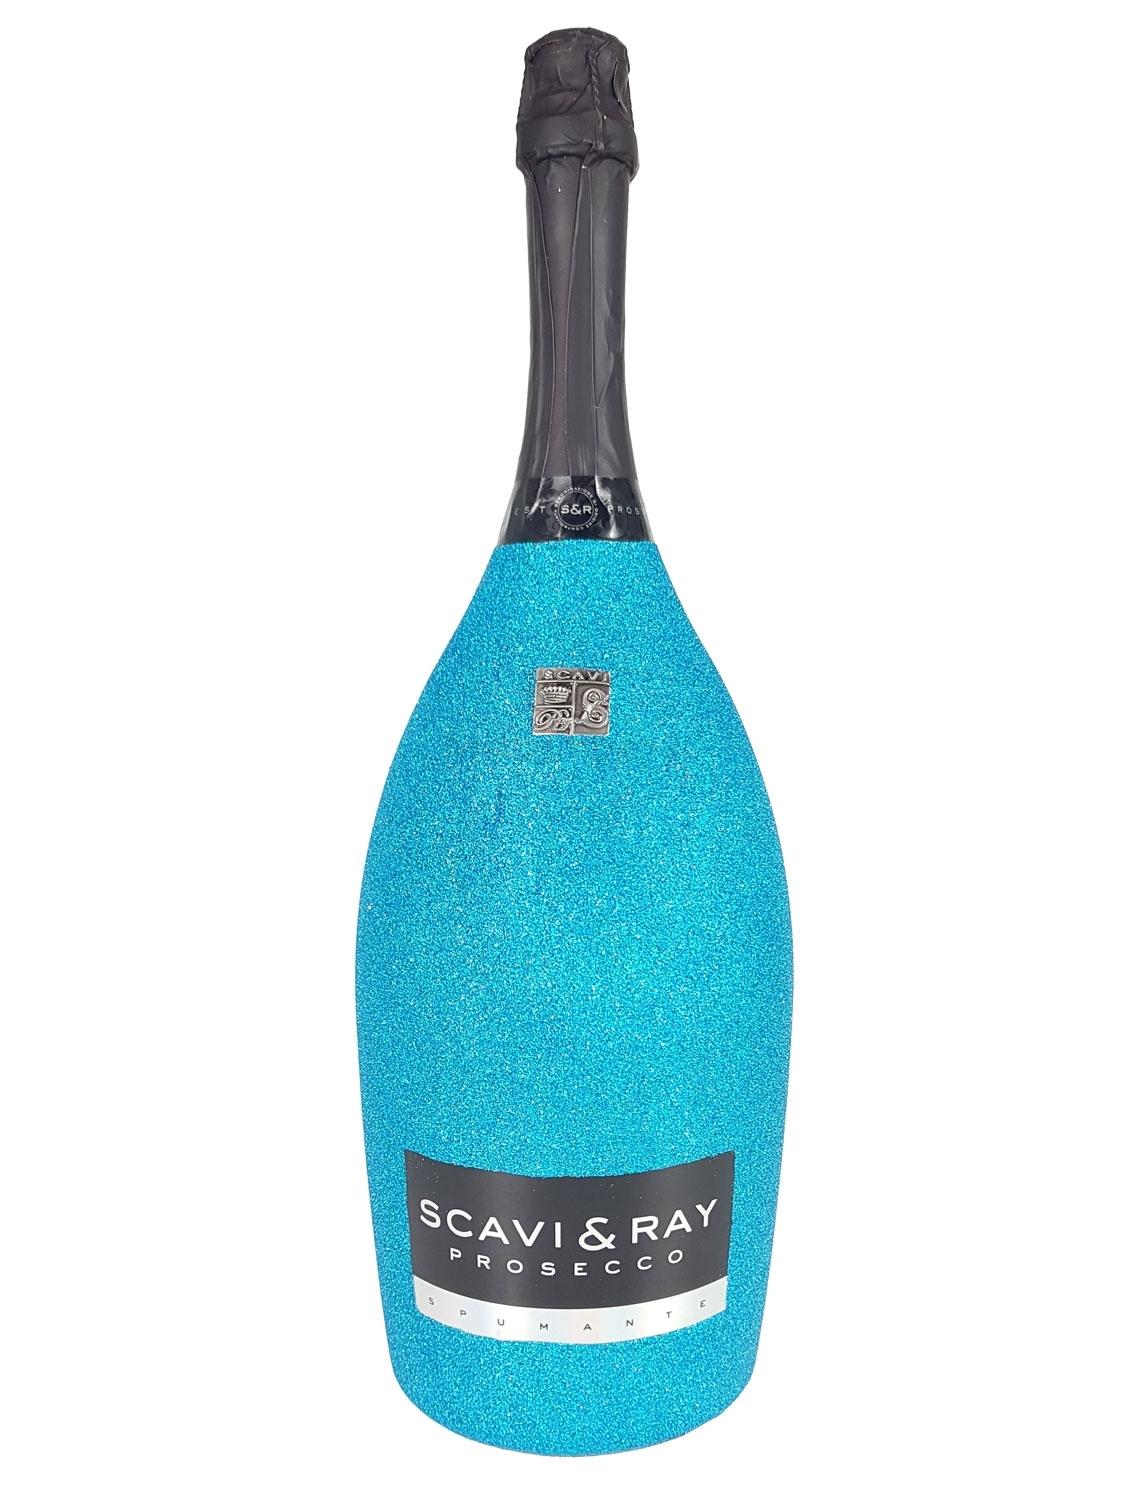 Scavi & Ray Prosecco Spumante Magnum 1,5l (11% Vol) Bling Bling Glitzerflasche Blau -[Enthält Sulfite]